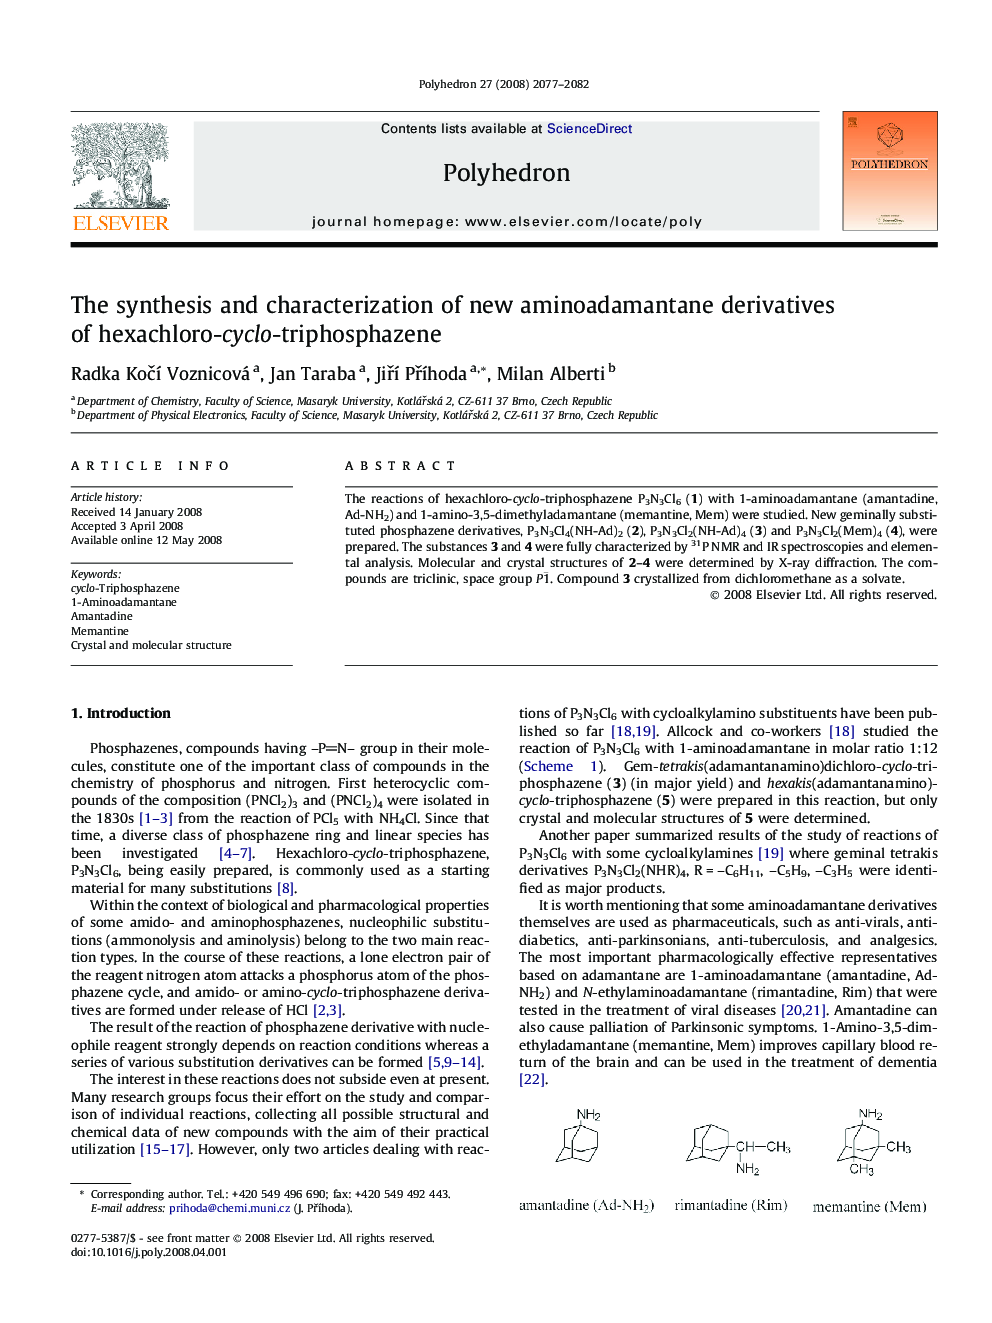 The synthesis and characterization of new aminoadamantane derivatives of hexachloro-cyclo-triphosphazene